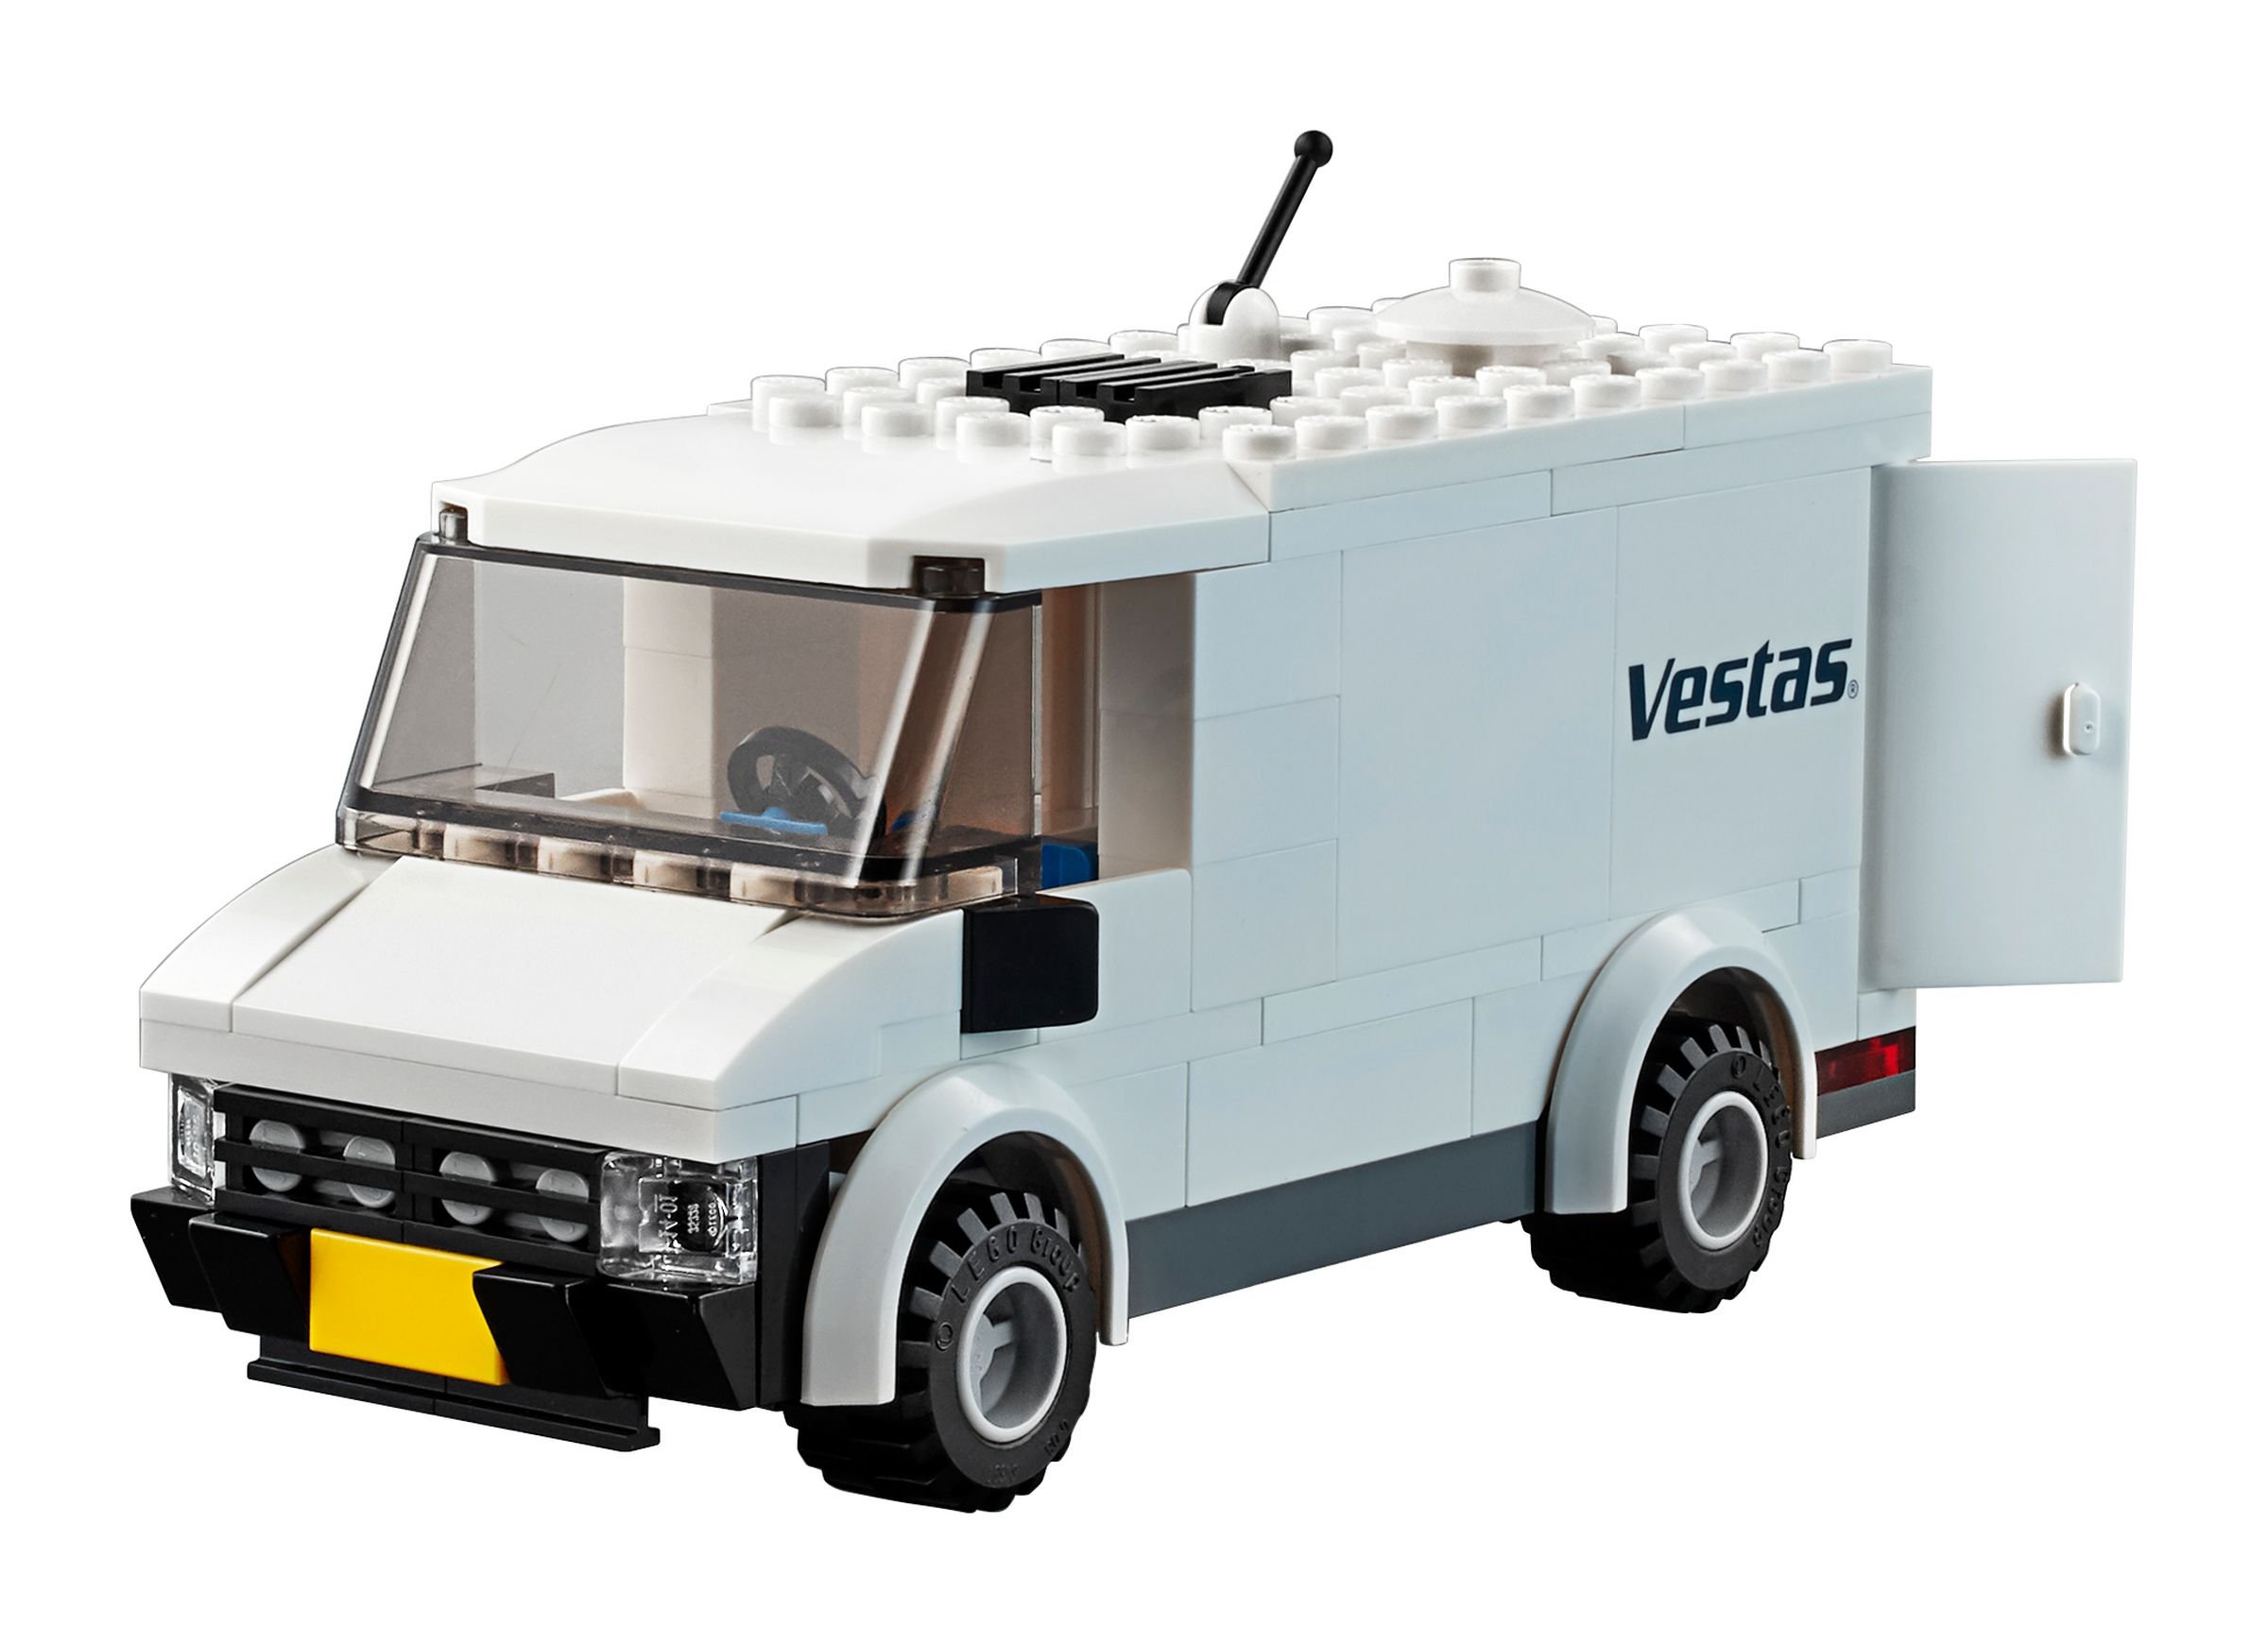 LEGO Advanced Models 10268 Vestas® Windkraftanlage LEGO_10268_alt12.jpg